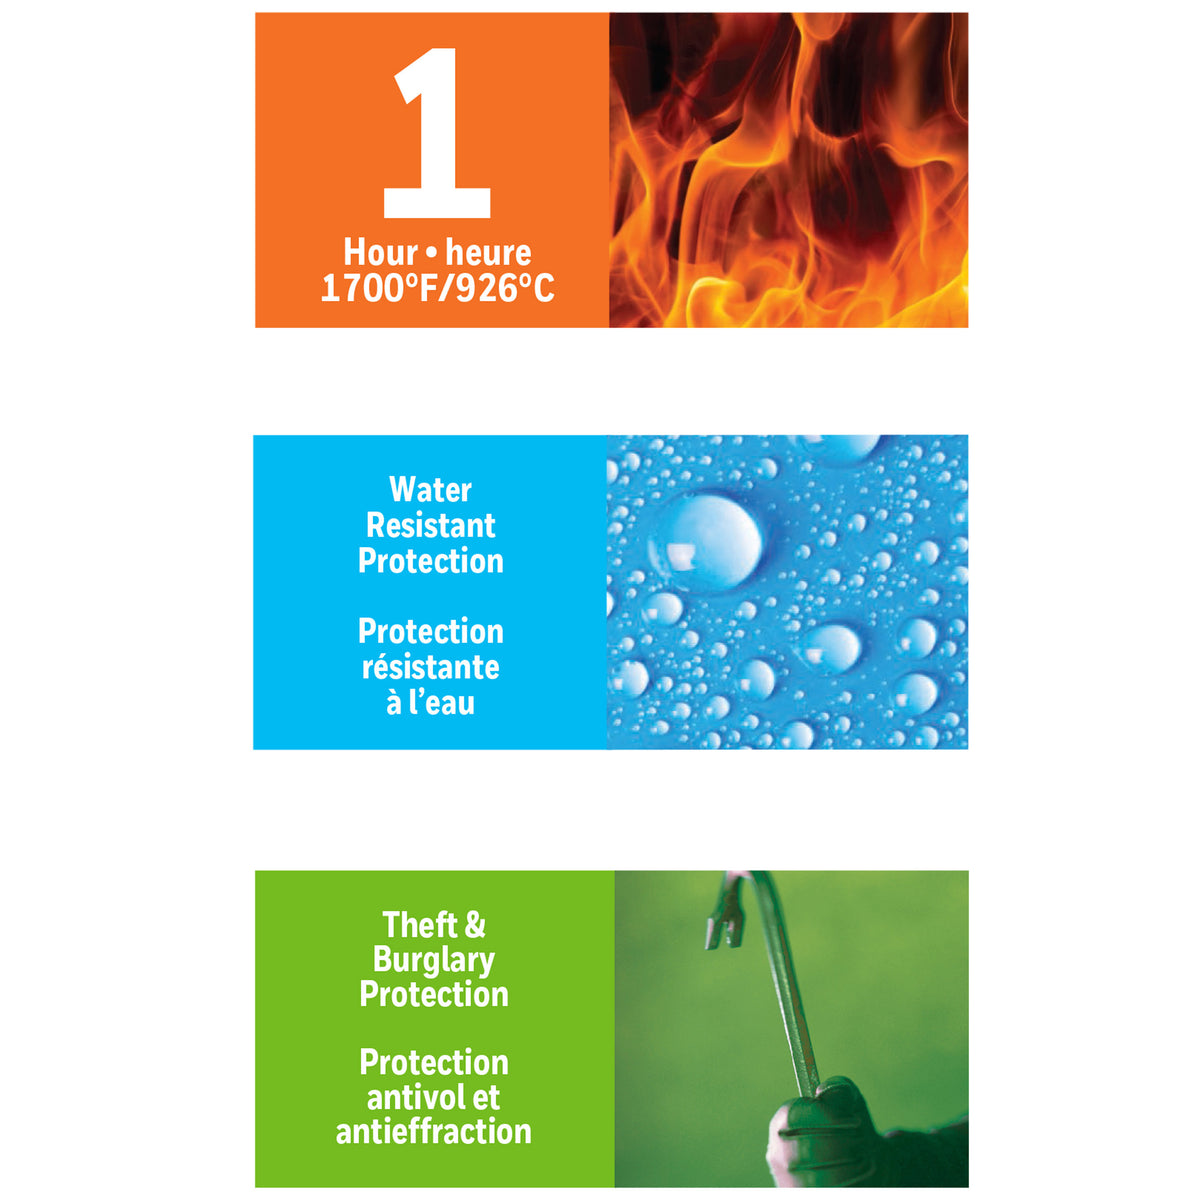 Honeywell 2102 Water Resistant Steel Fire Safe Features